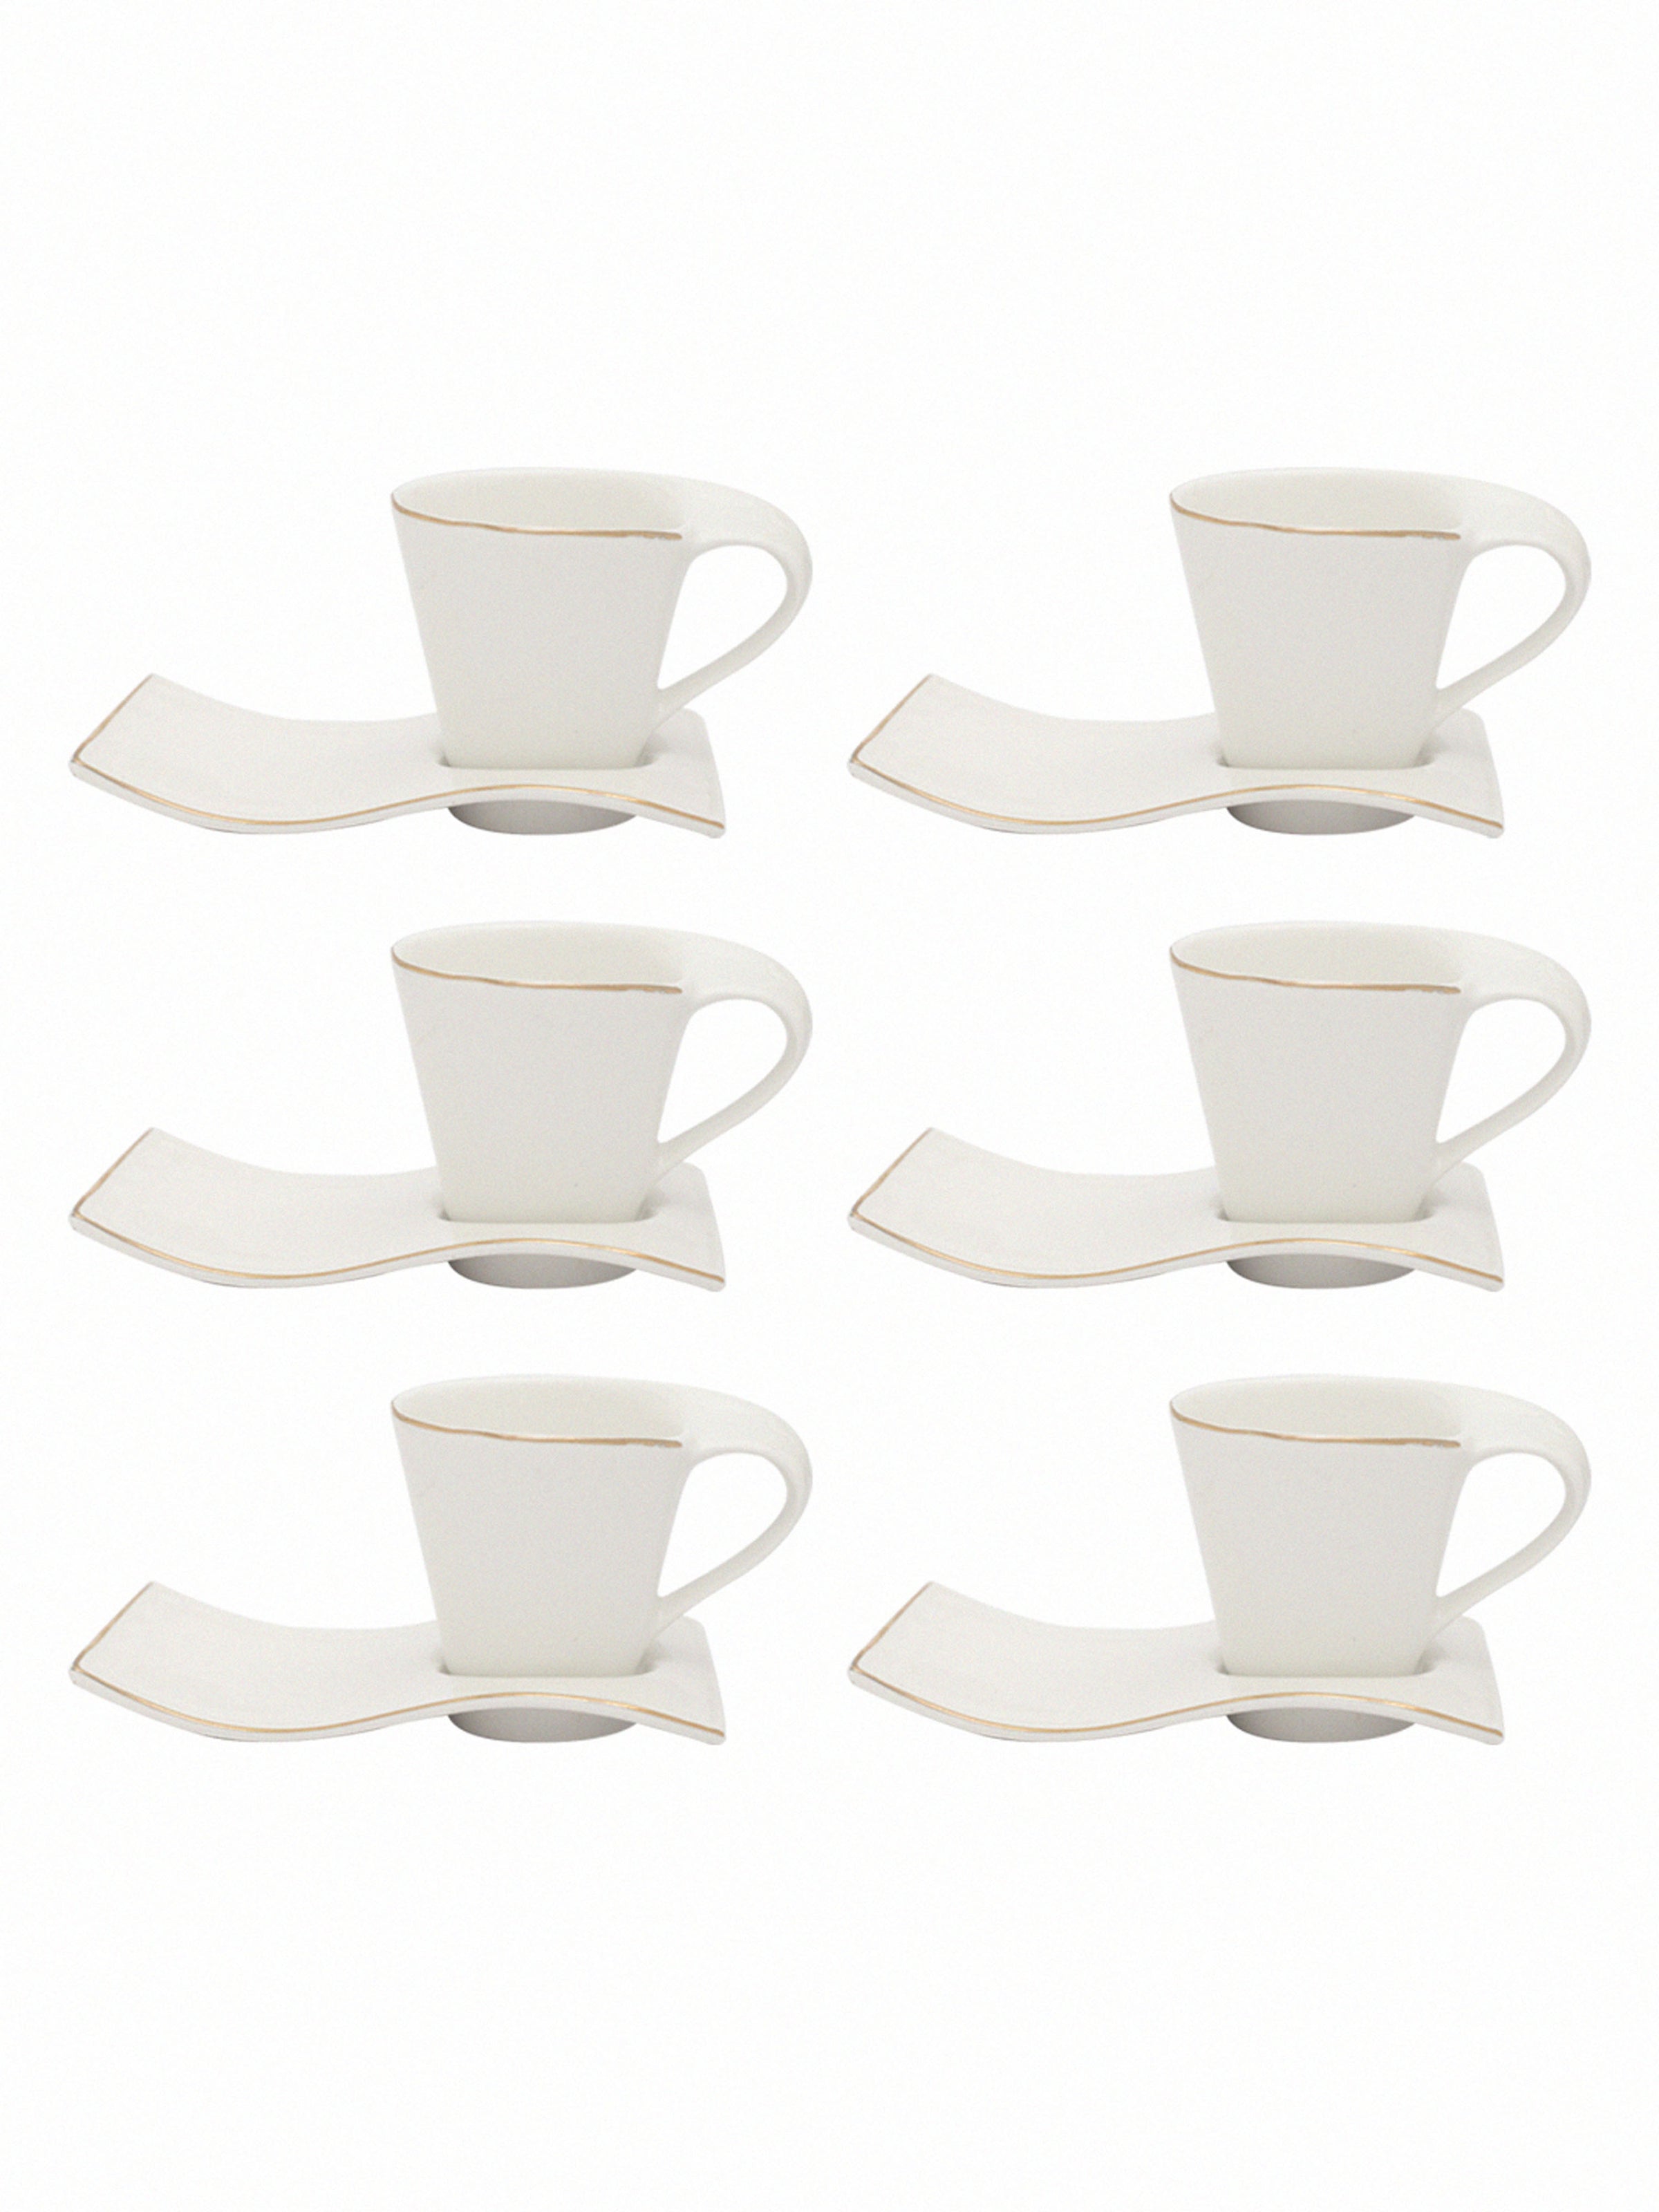 Teacups Gold S00 - Art of Living - Home